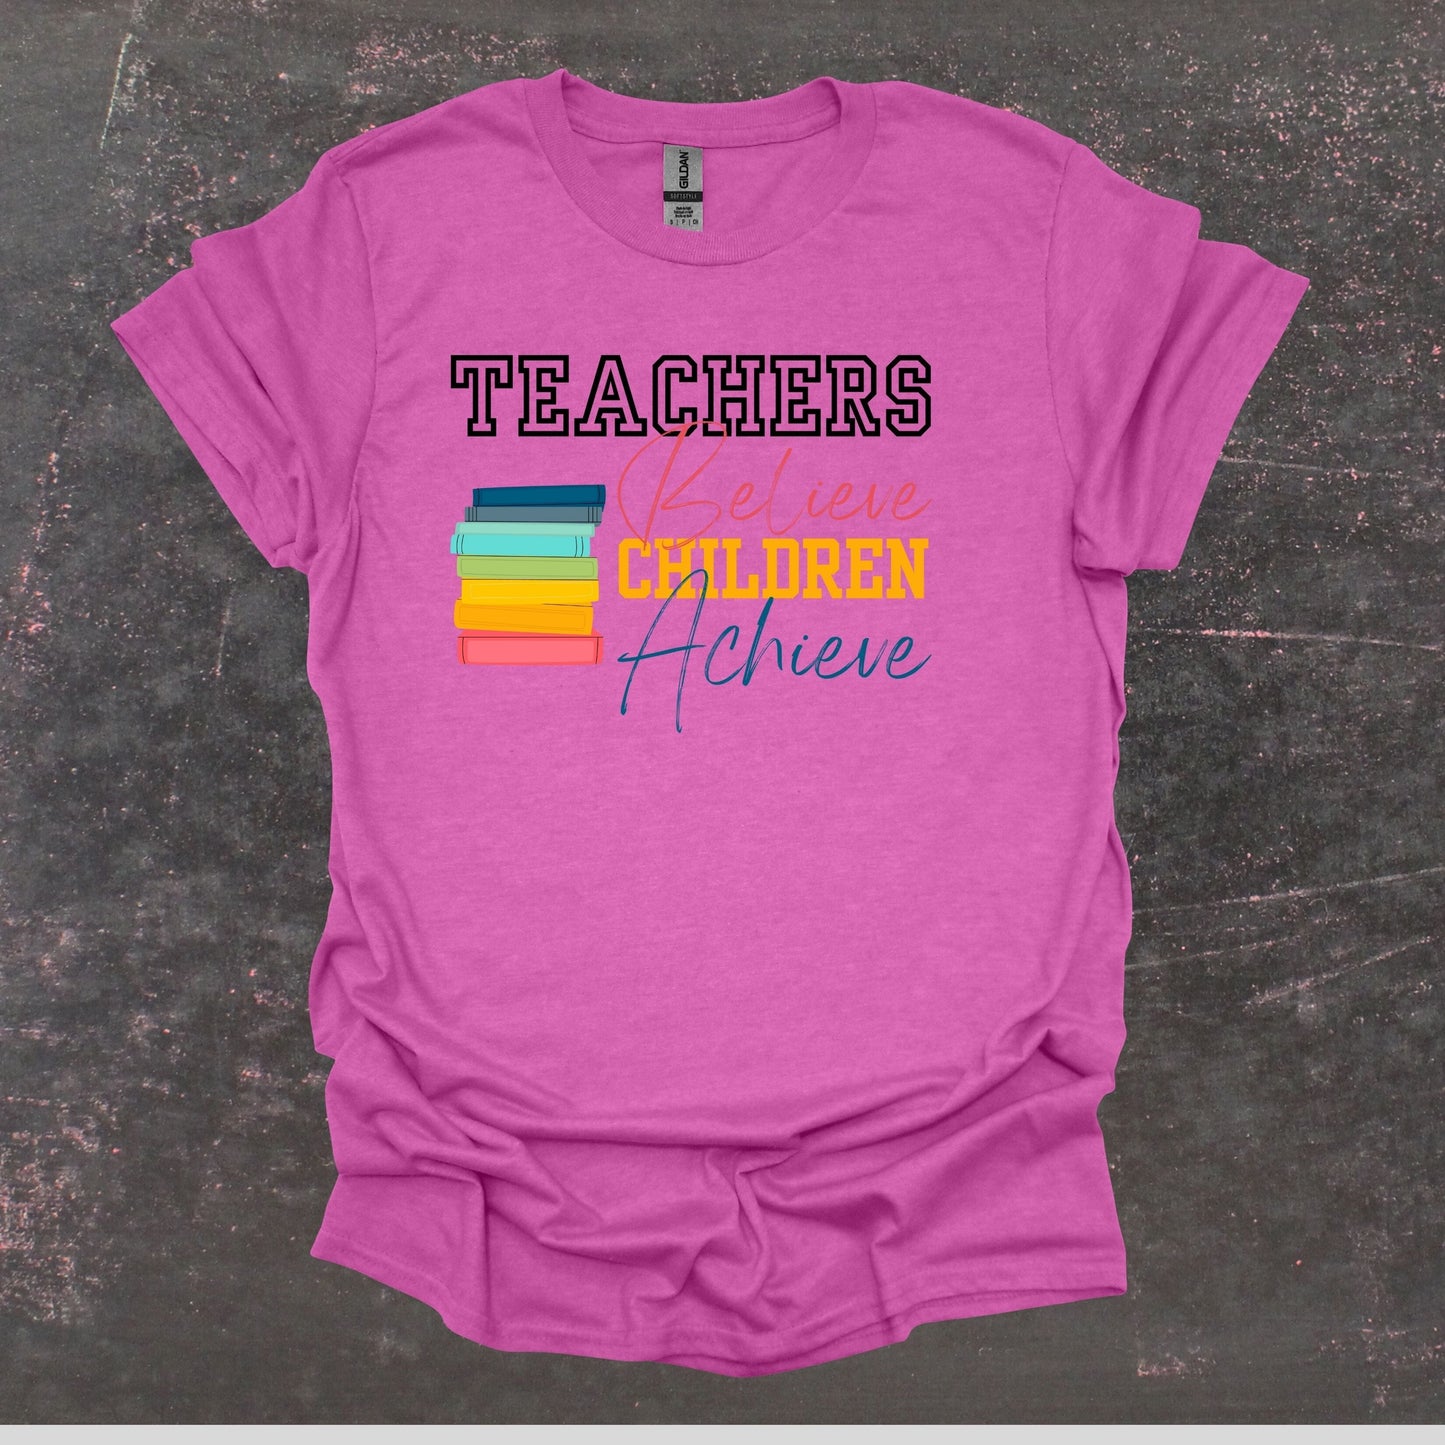 Teachers Believe Children Achieve - Teacher T Shirt - Adult Tee Shirts T-Shirts Graphic Avenue Heather Berry Adult Small 